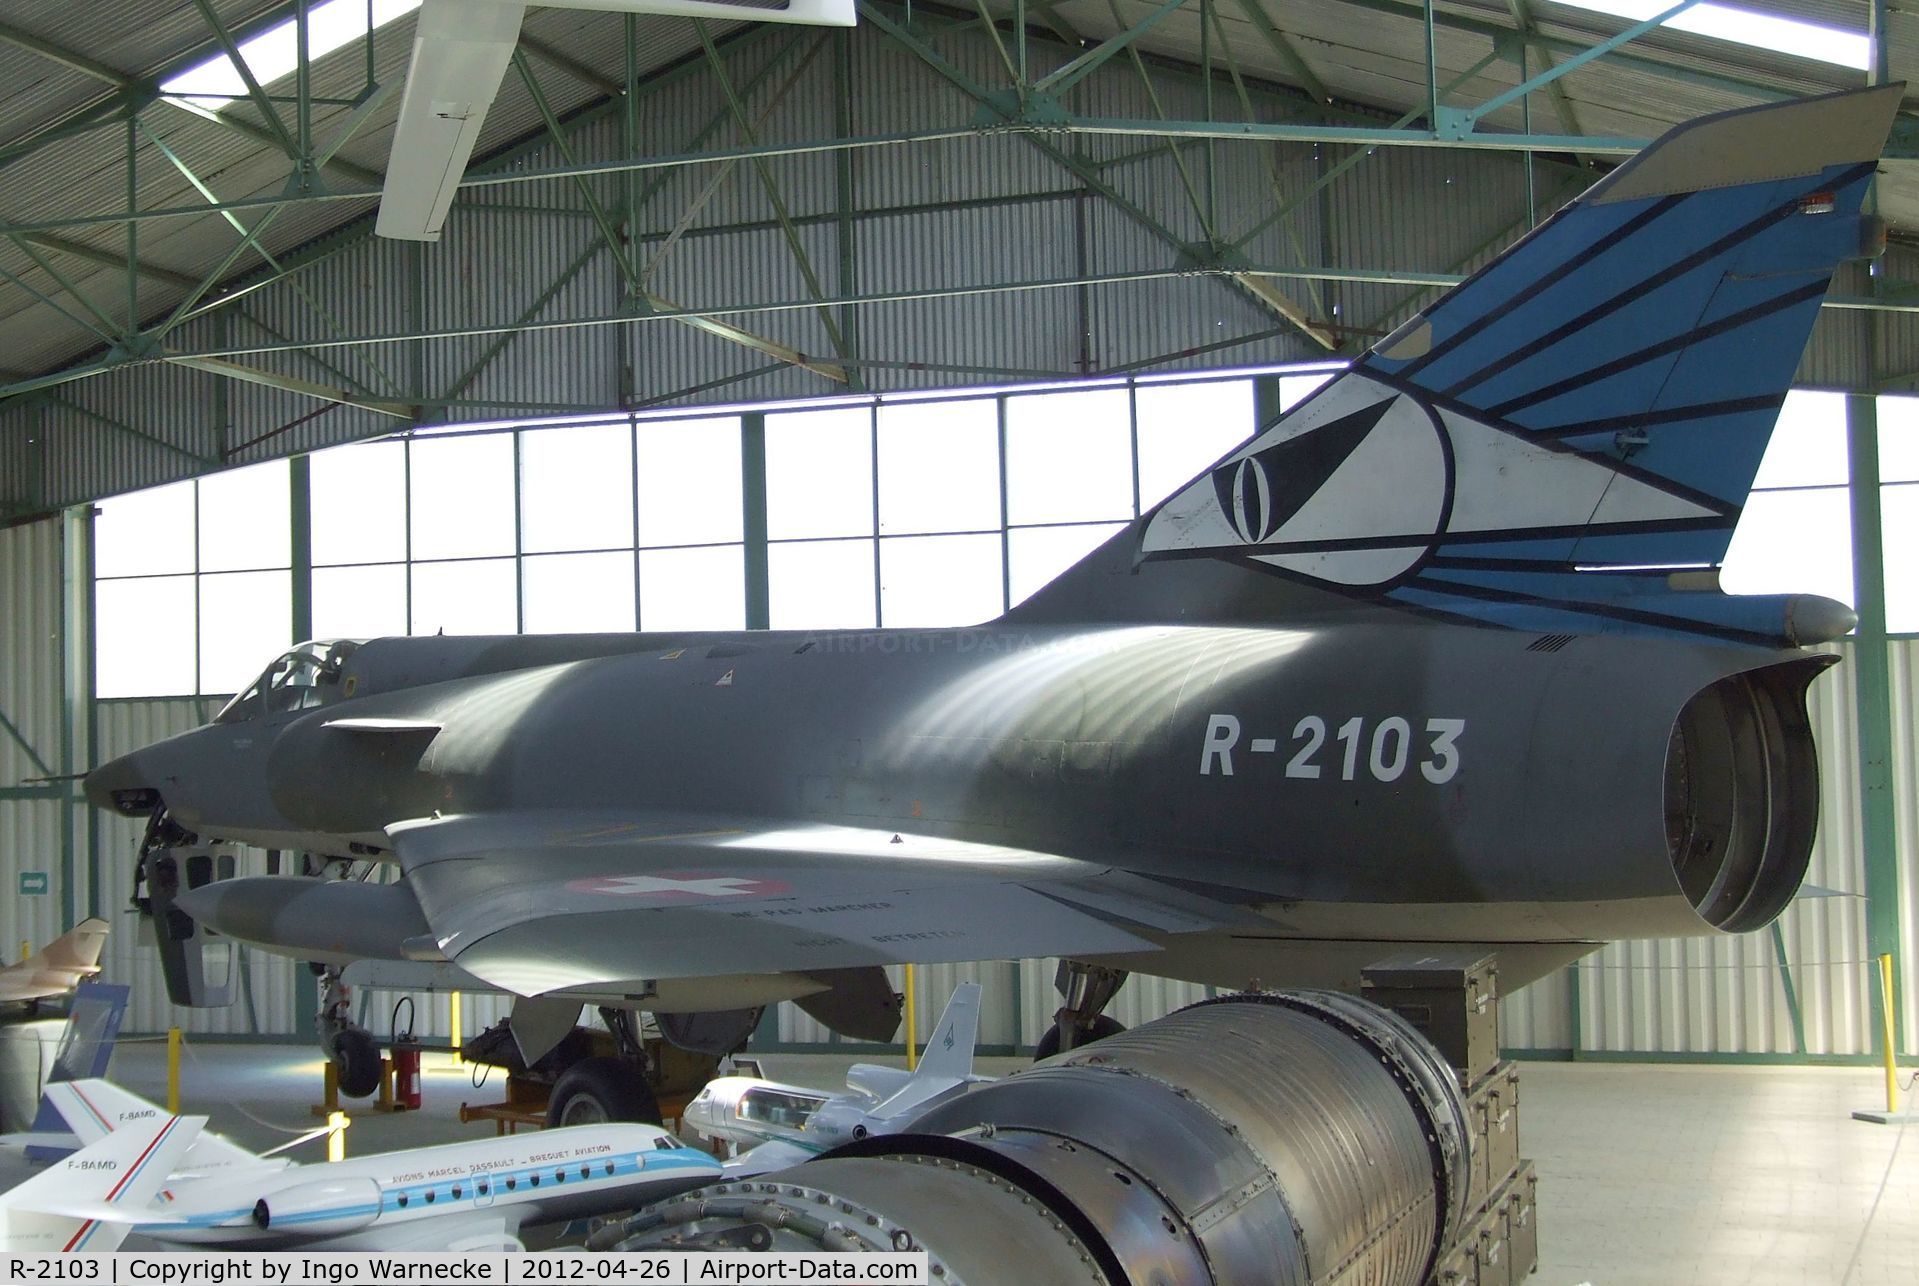 R-2103, Dassault Mirage IIIRS C/N 17-26-135/1028, Dassault Mirage III RS at the Musée Européen de l'Aviation de Chasse, Montelimar Ancone airfield